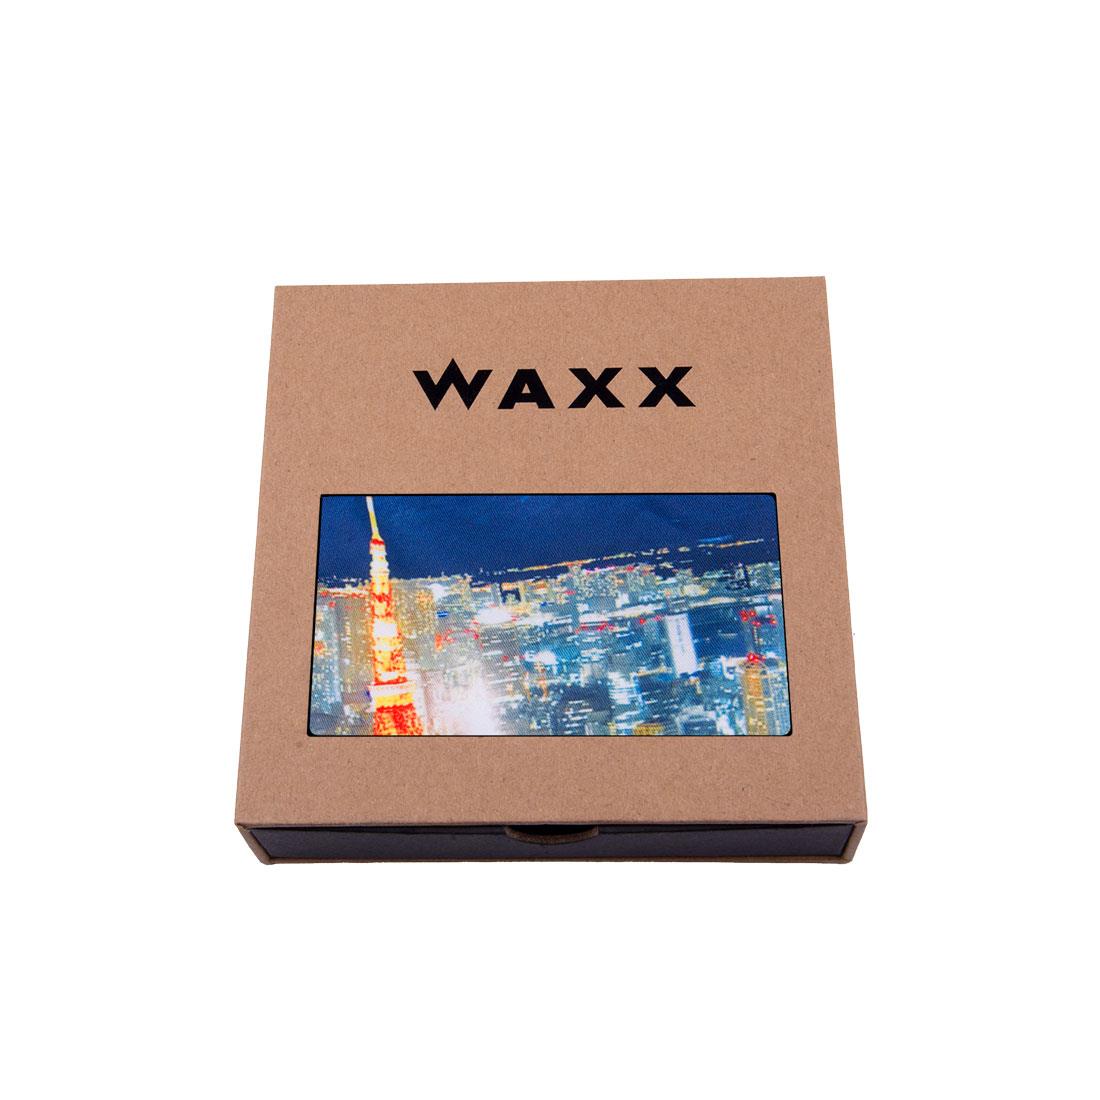 Waxx Men's Trunk Boxer Short Fuji